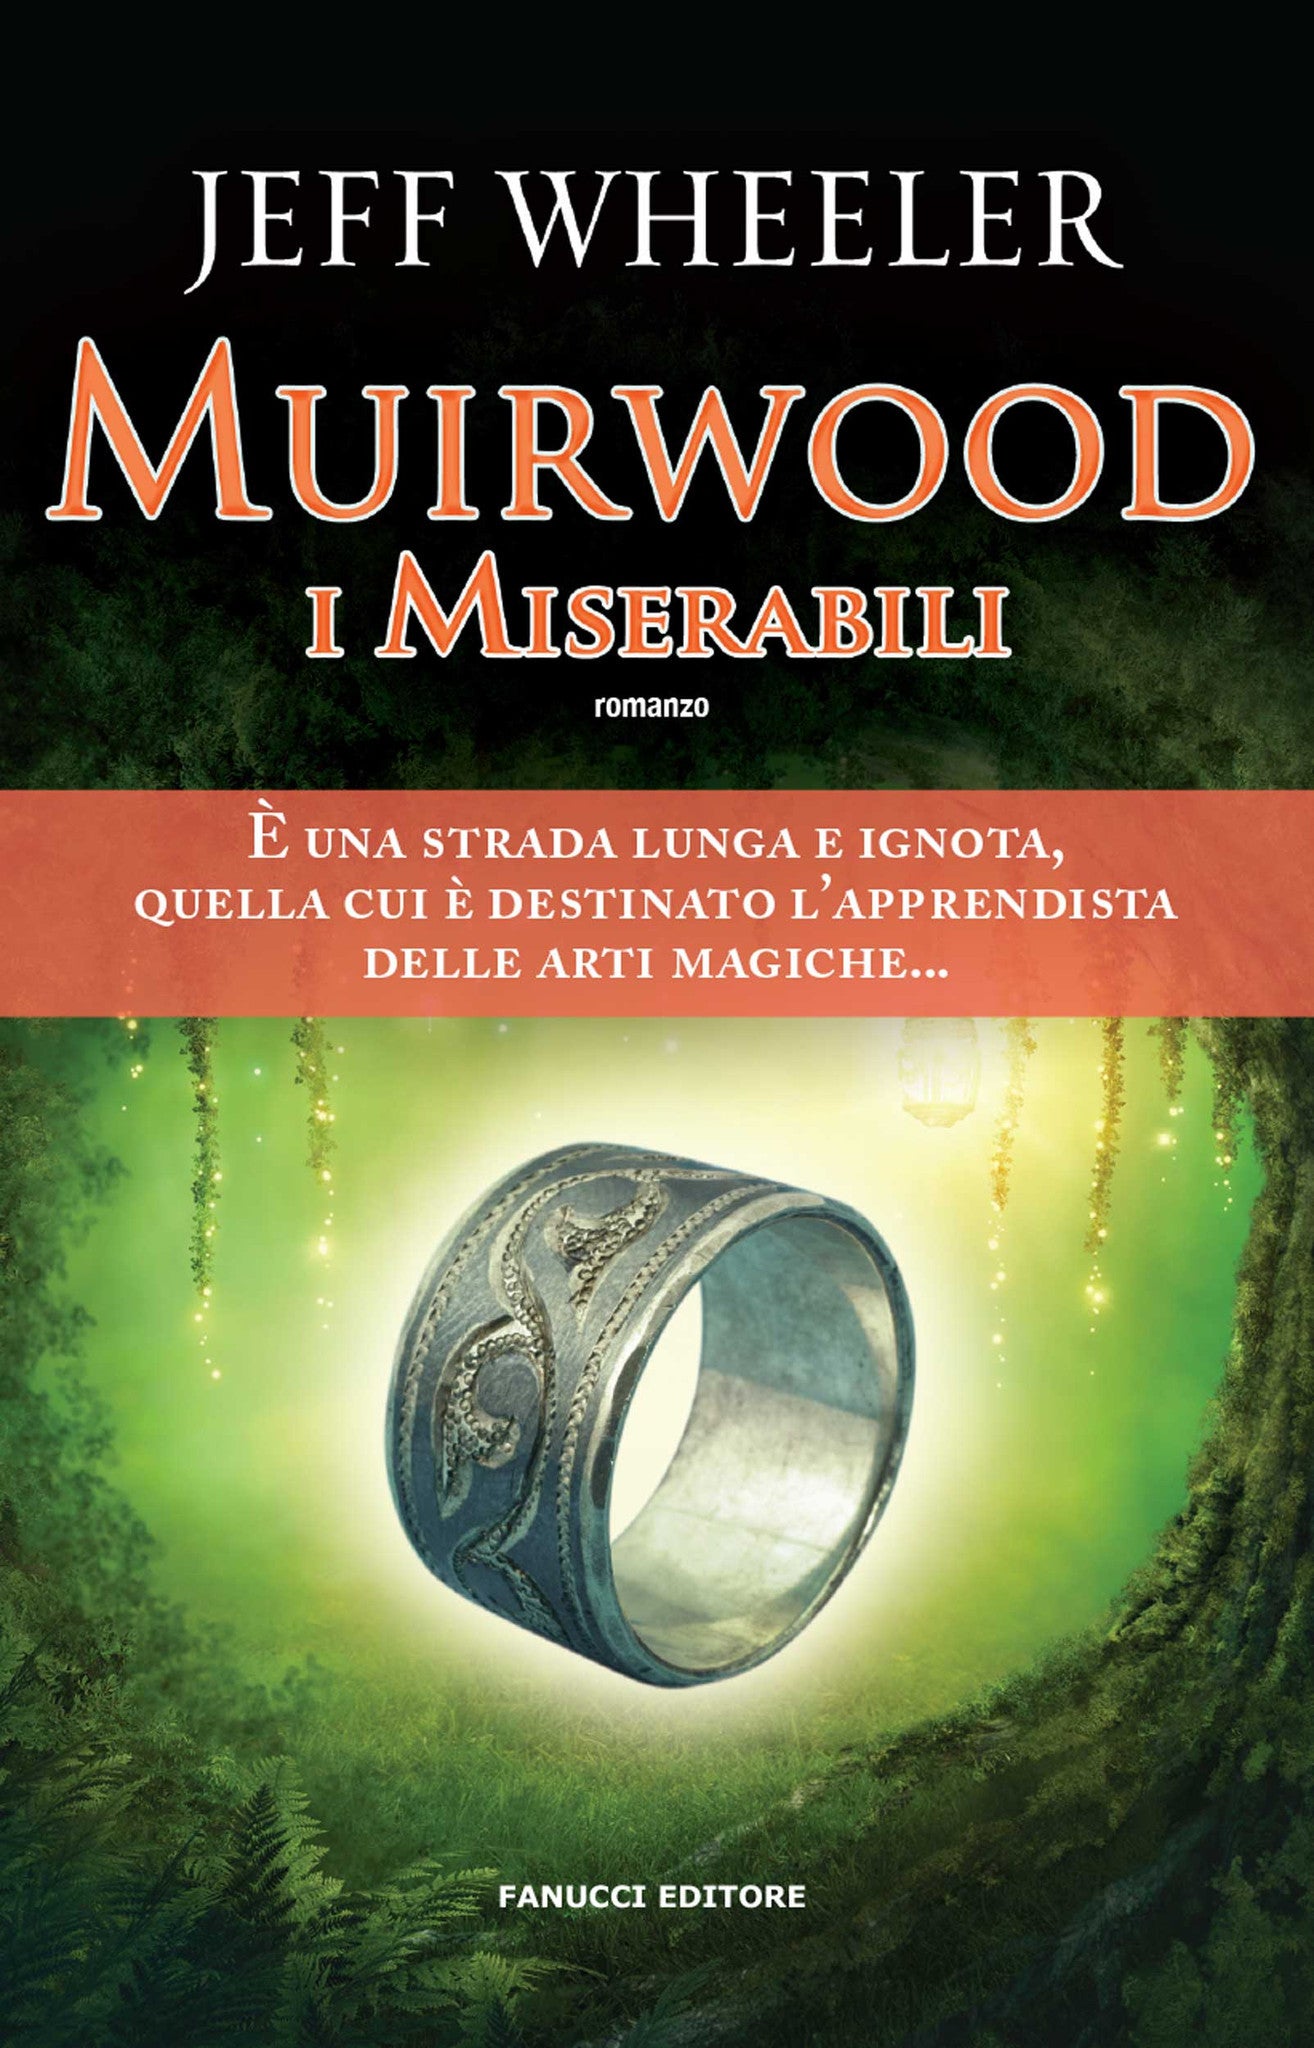 Muirwood. I miserabili (Le leggende di Muirwood #1)